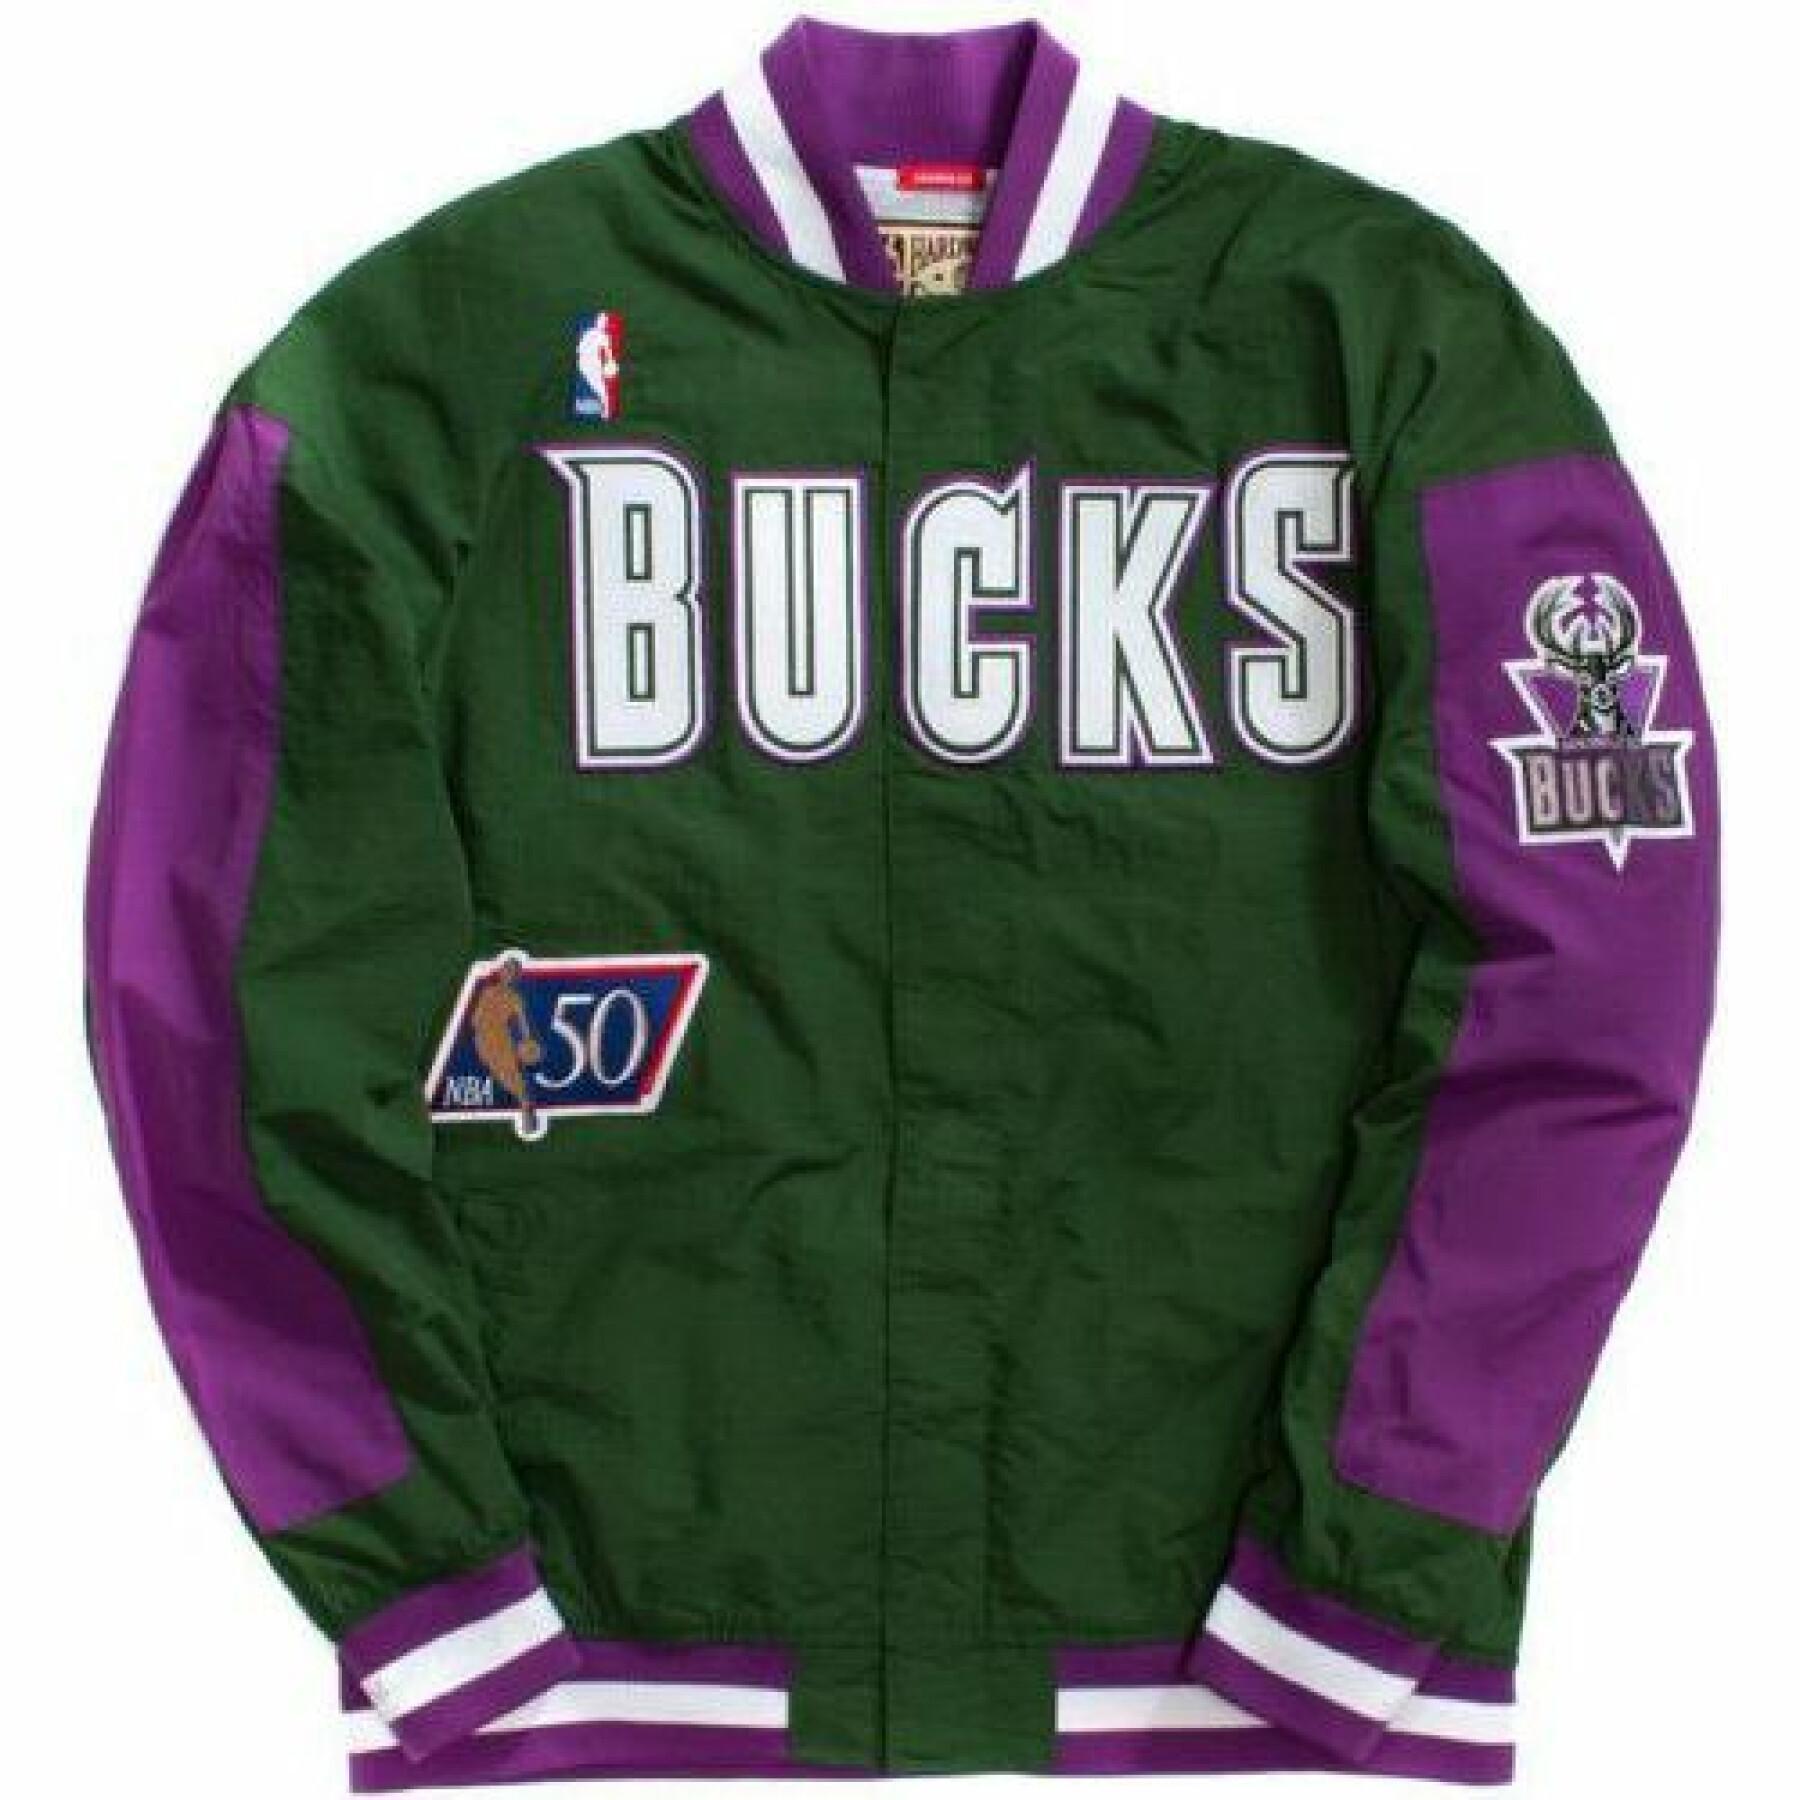 Jacke Milwaukee Bucks nba authentic 1996/97